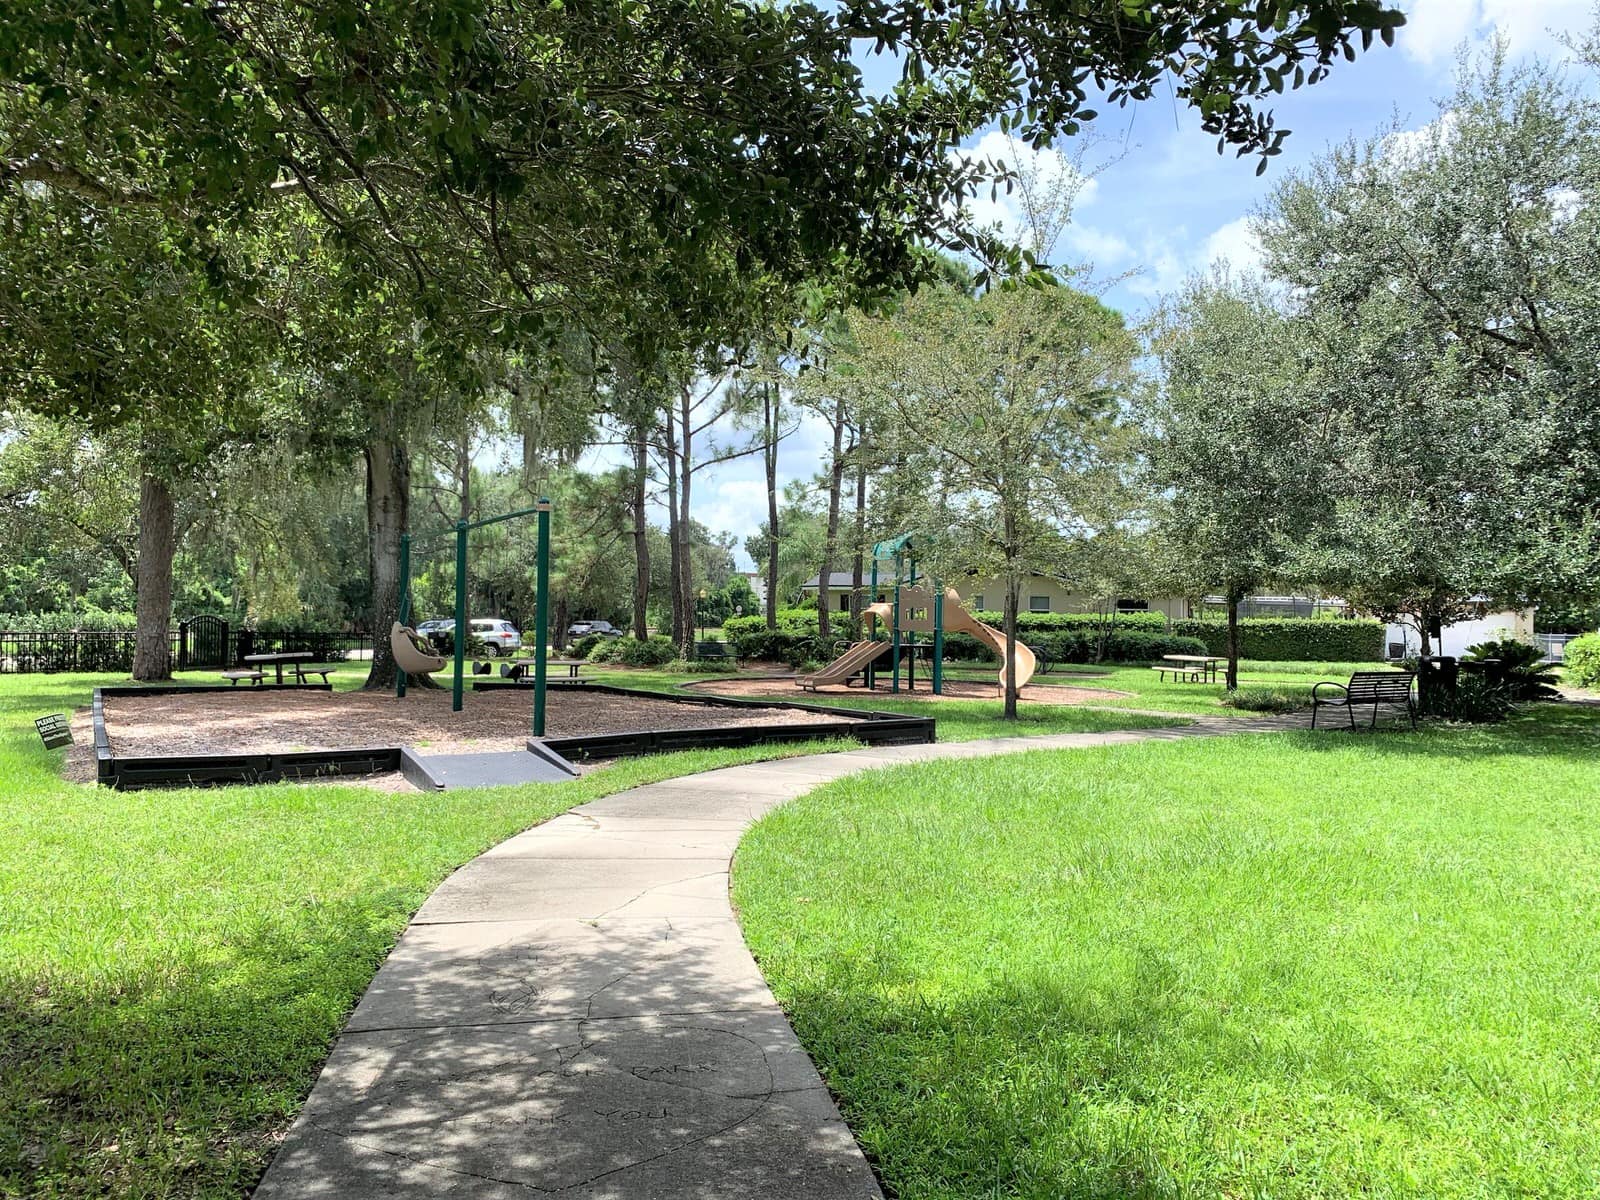 https://cityofwinterpark.org/wp-content/uploads/2020/10/Featured-image-Mini-Parks.jpg